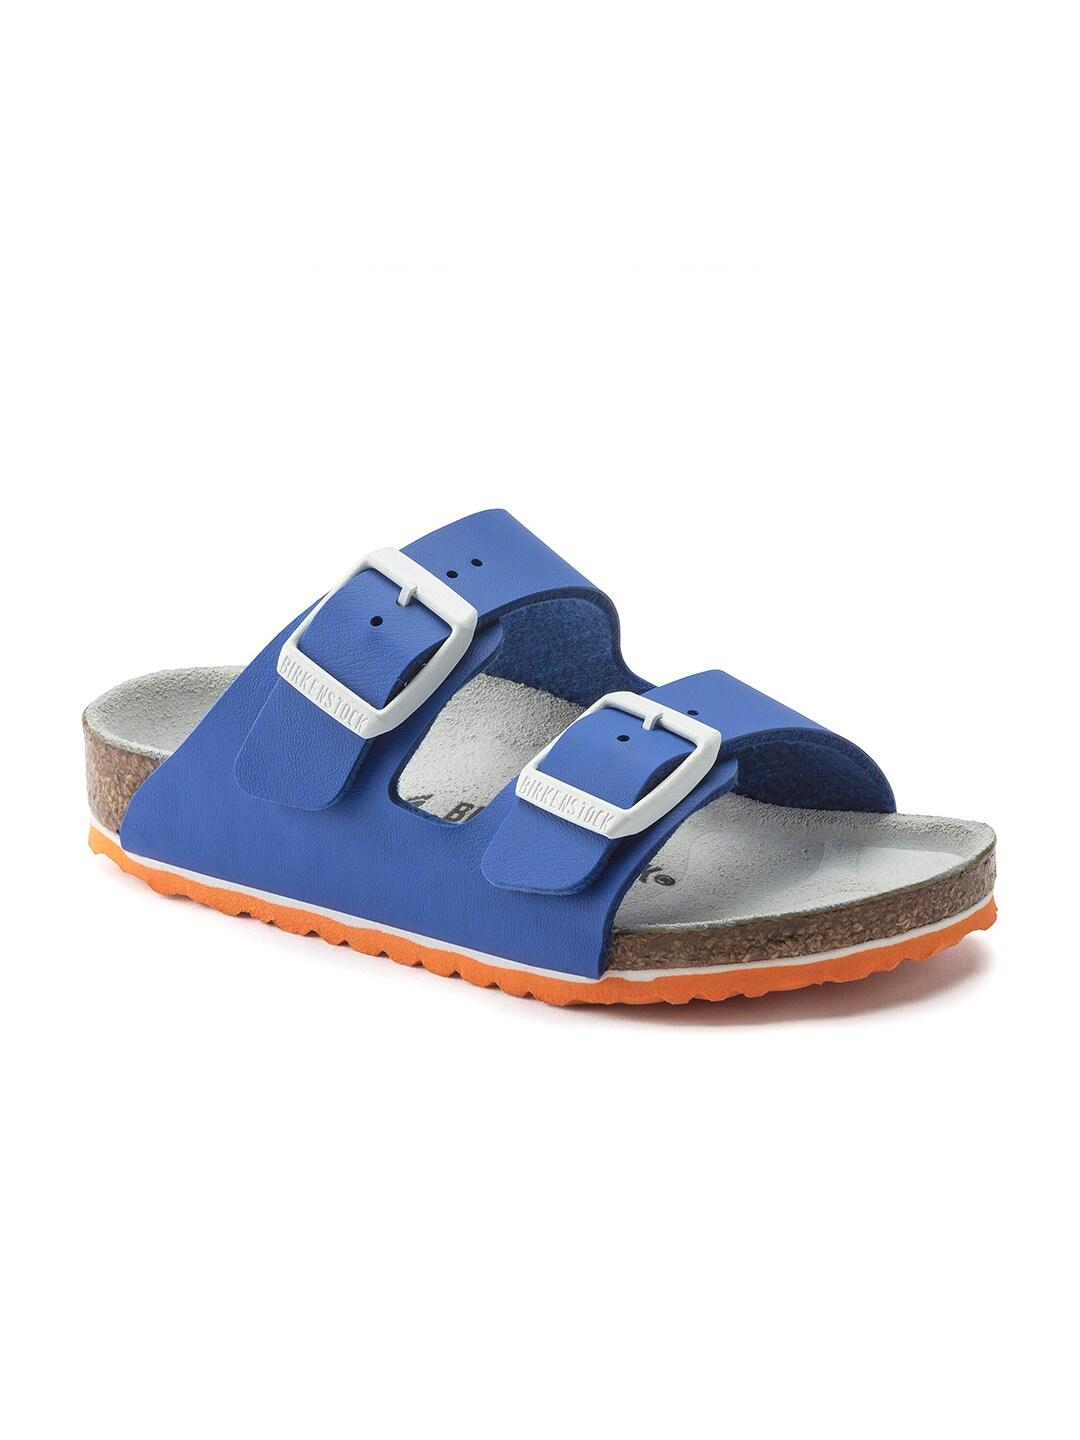 Birkenstock Boys Arizona Kids Blue & White Narrow Width Slide Sandals